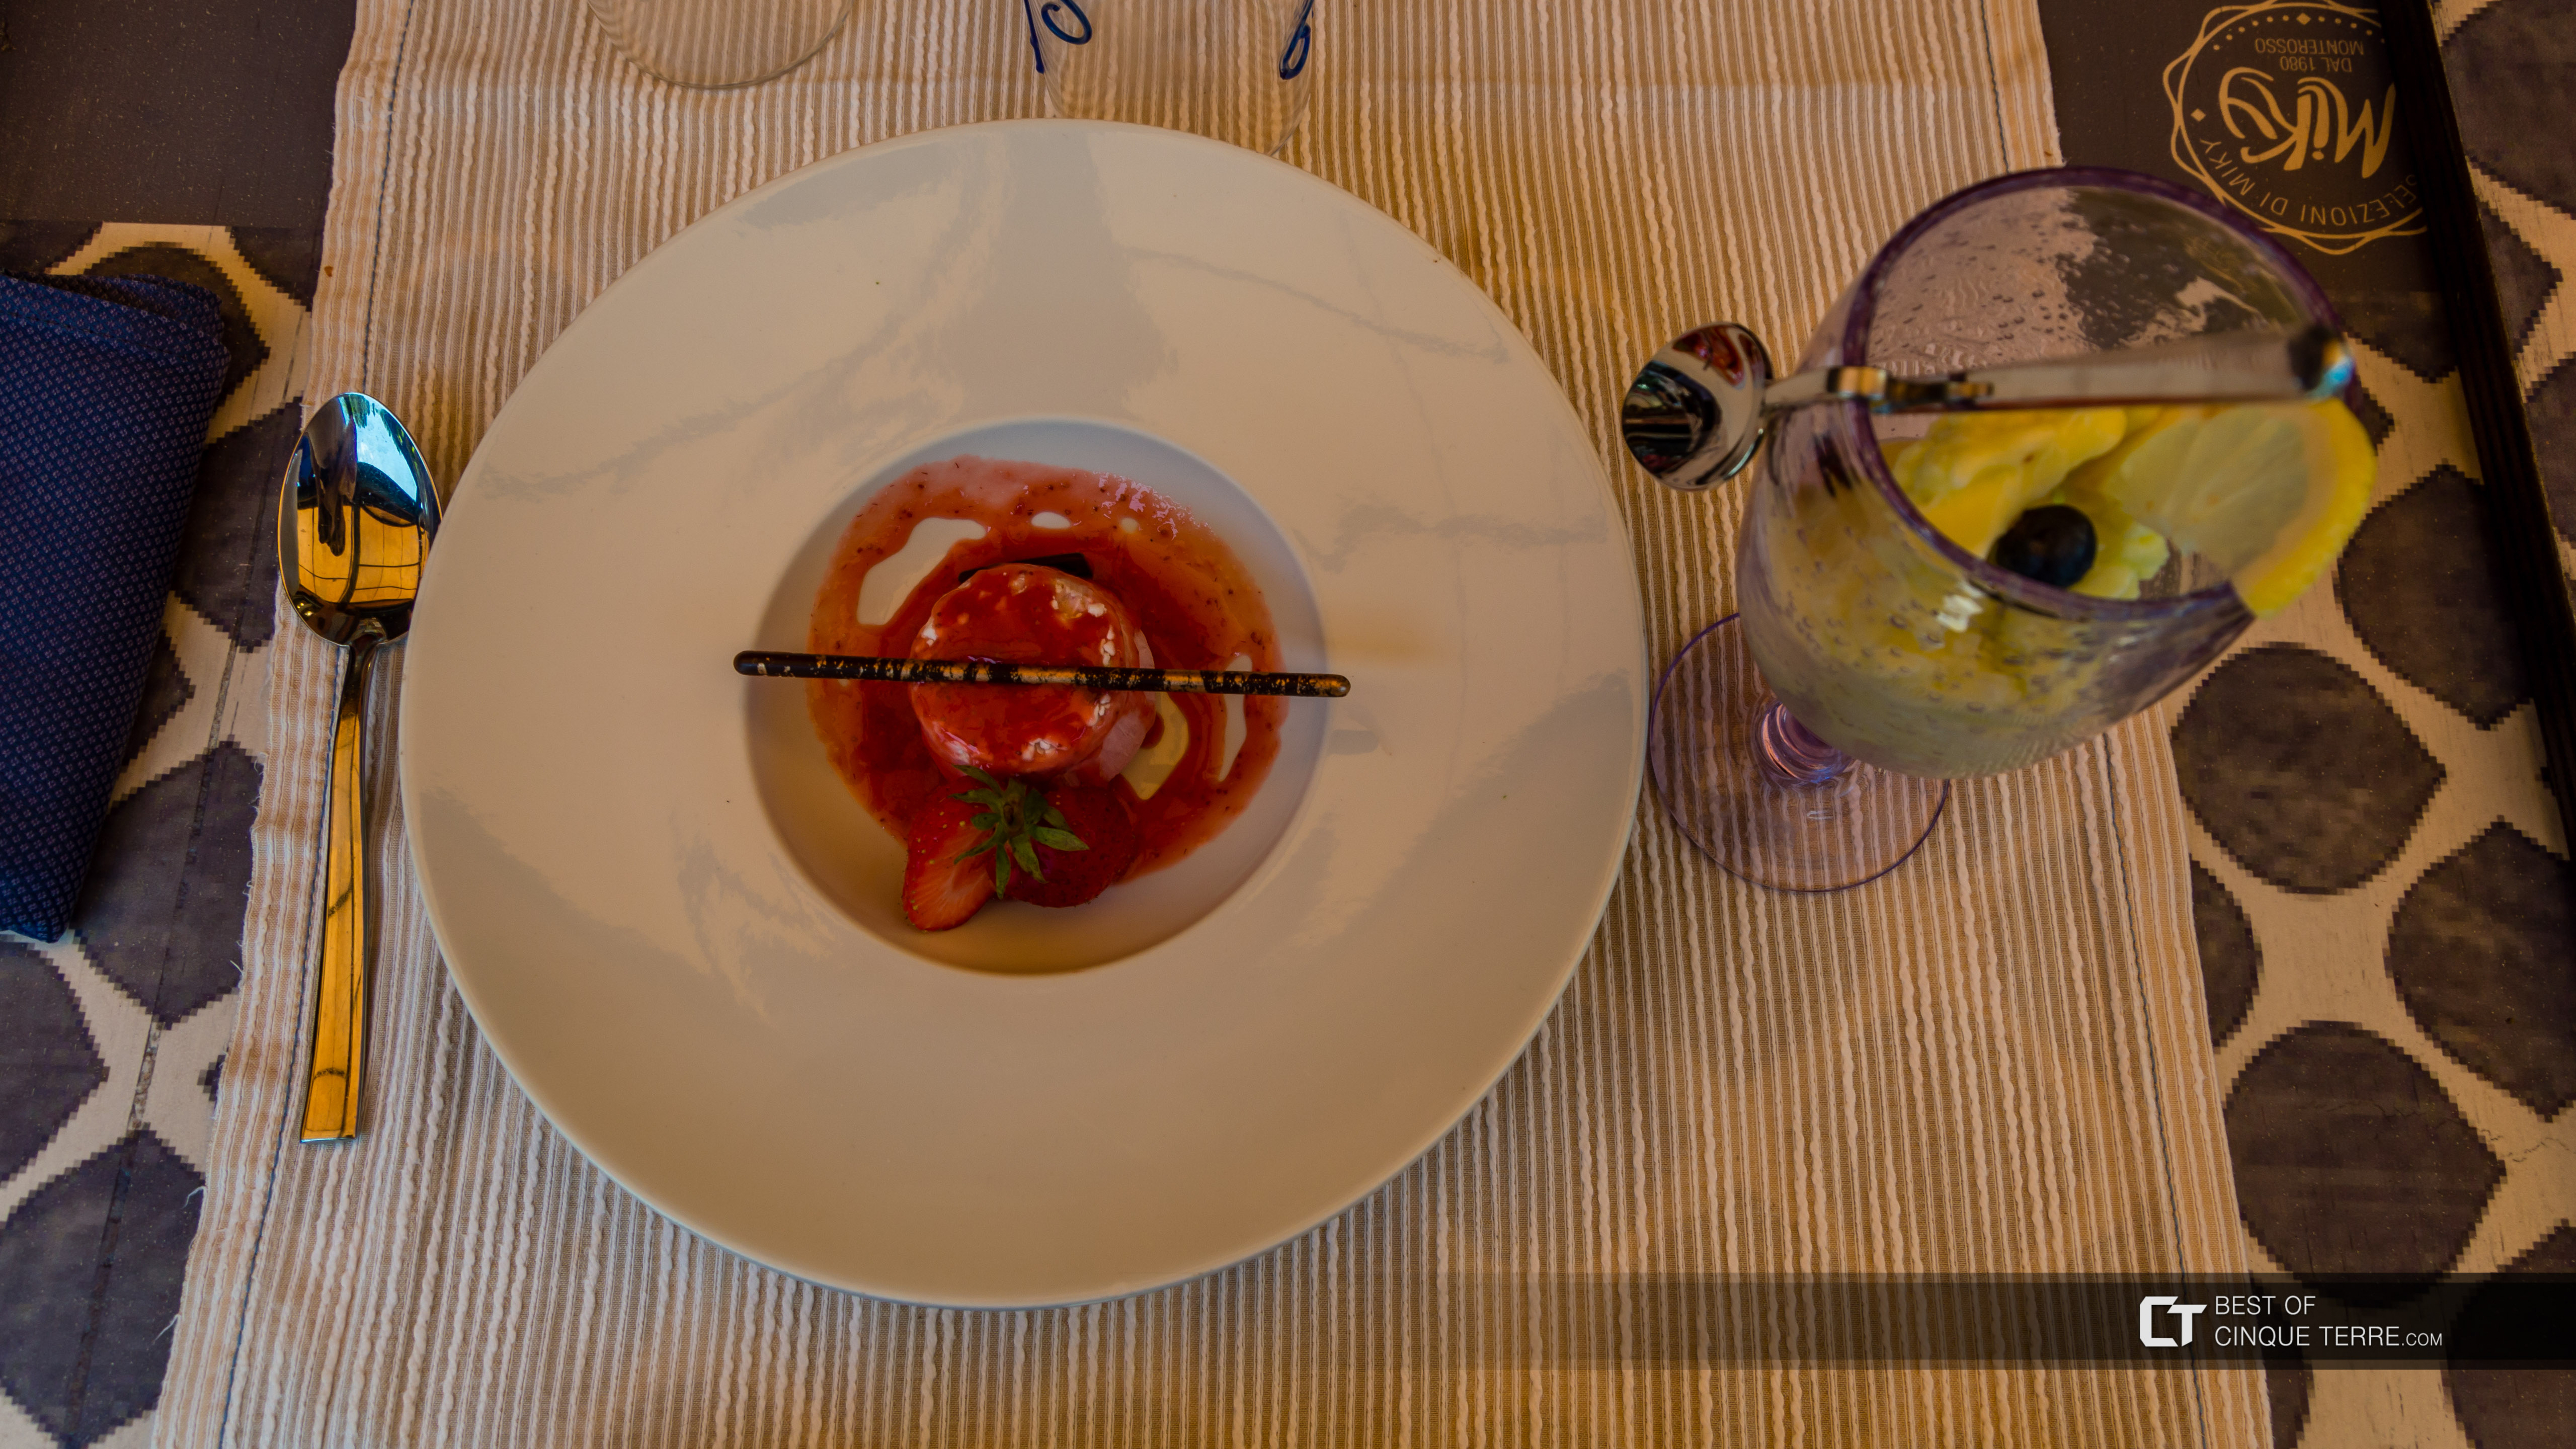 Nachspeise: Halbgefrorenes mit Himbeeren und Zitronensorbet (Restaurant Miky, Monterosso al Mare), Lokales Essen, Cinque Terre, Italien